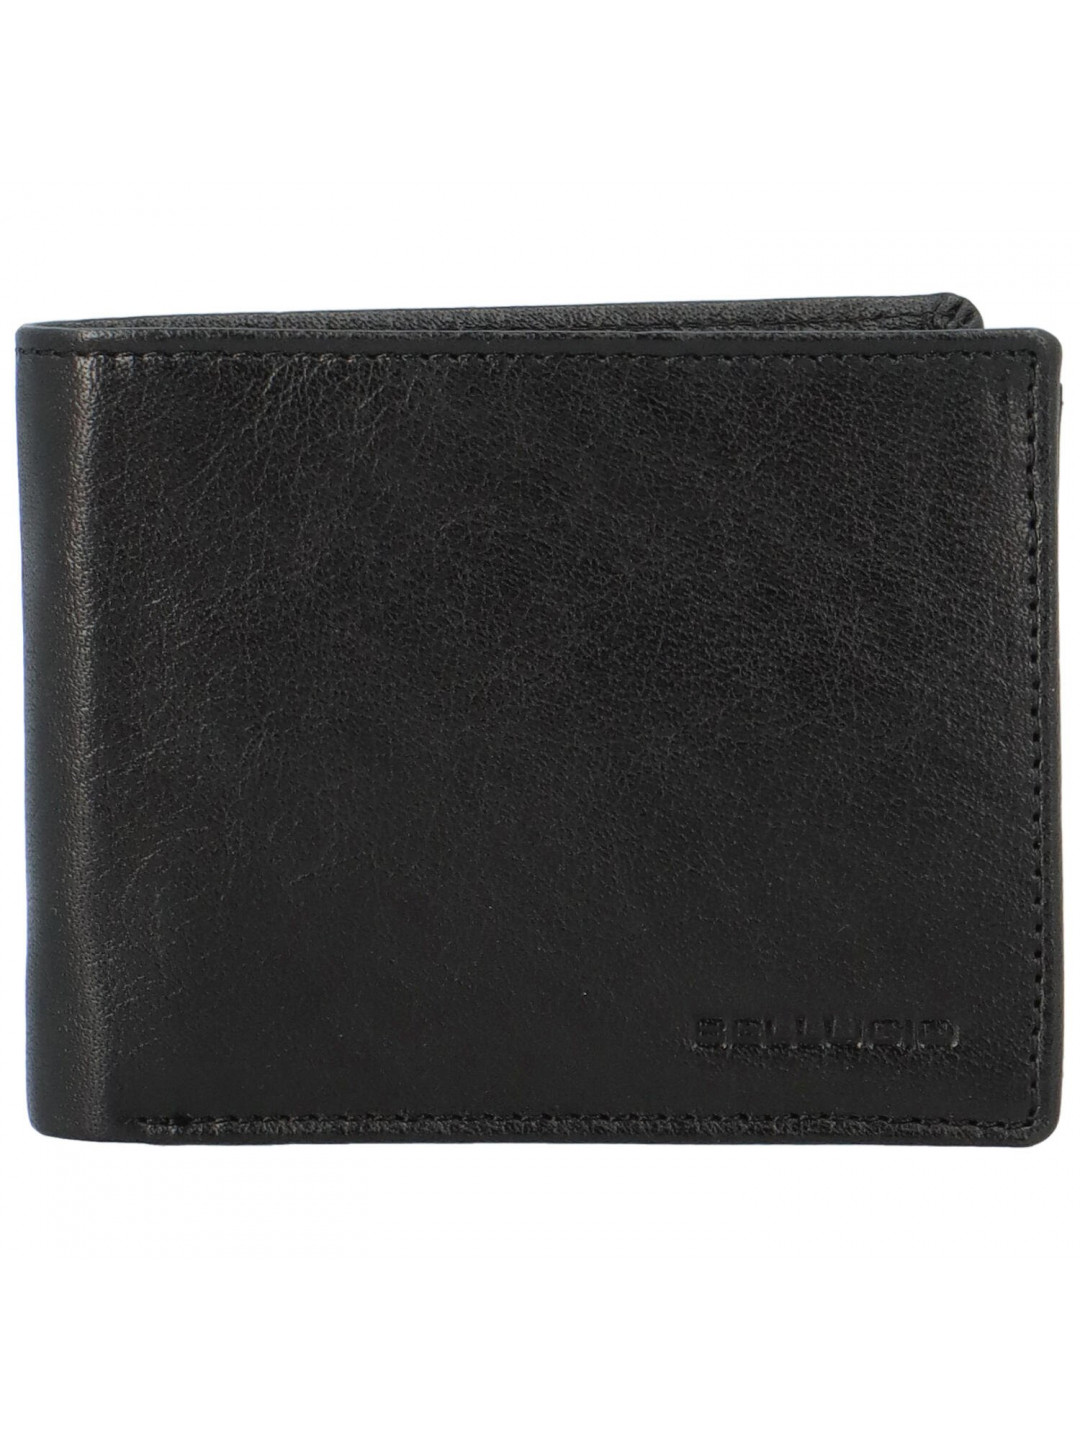 Pánská kožená peněženka na šířku Bellugio Atticus černá